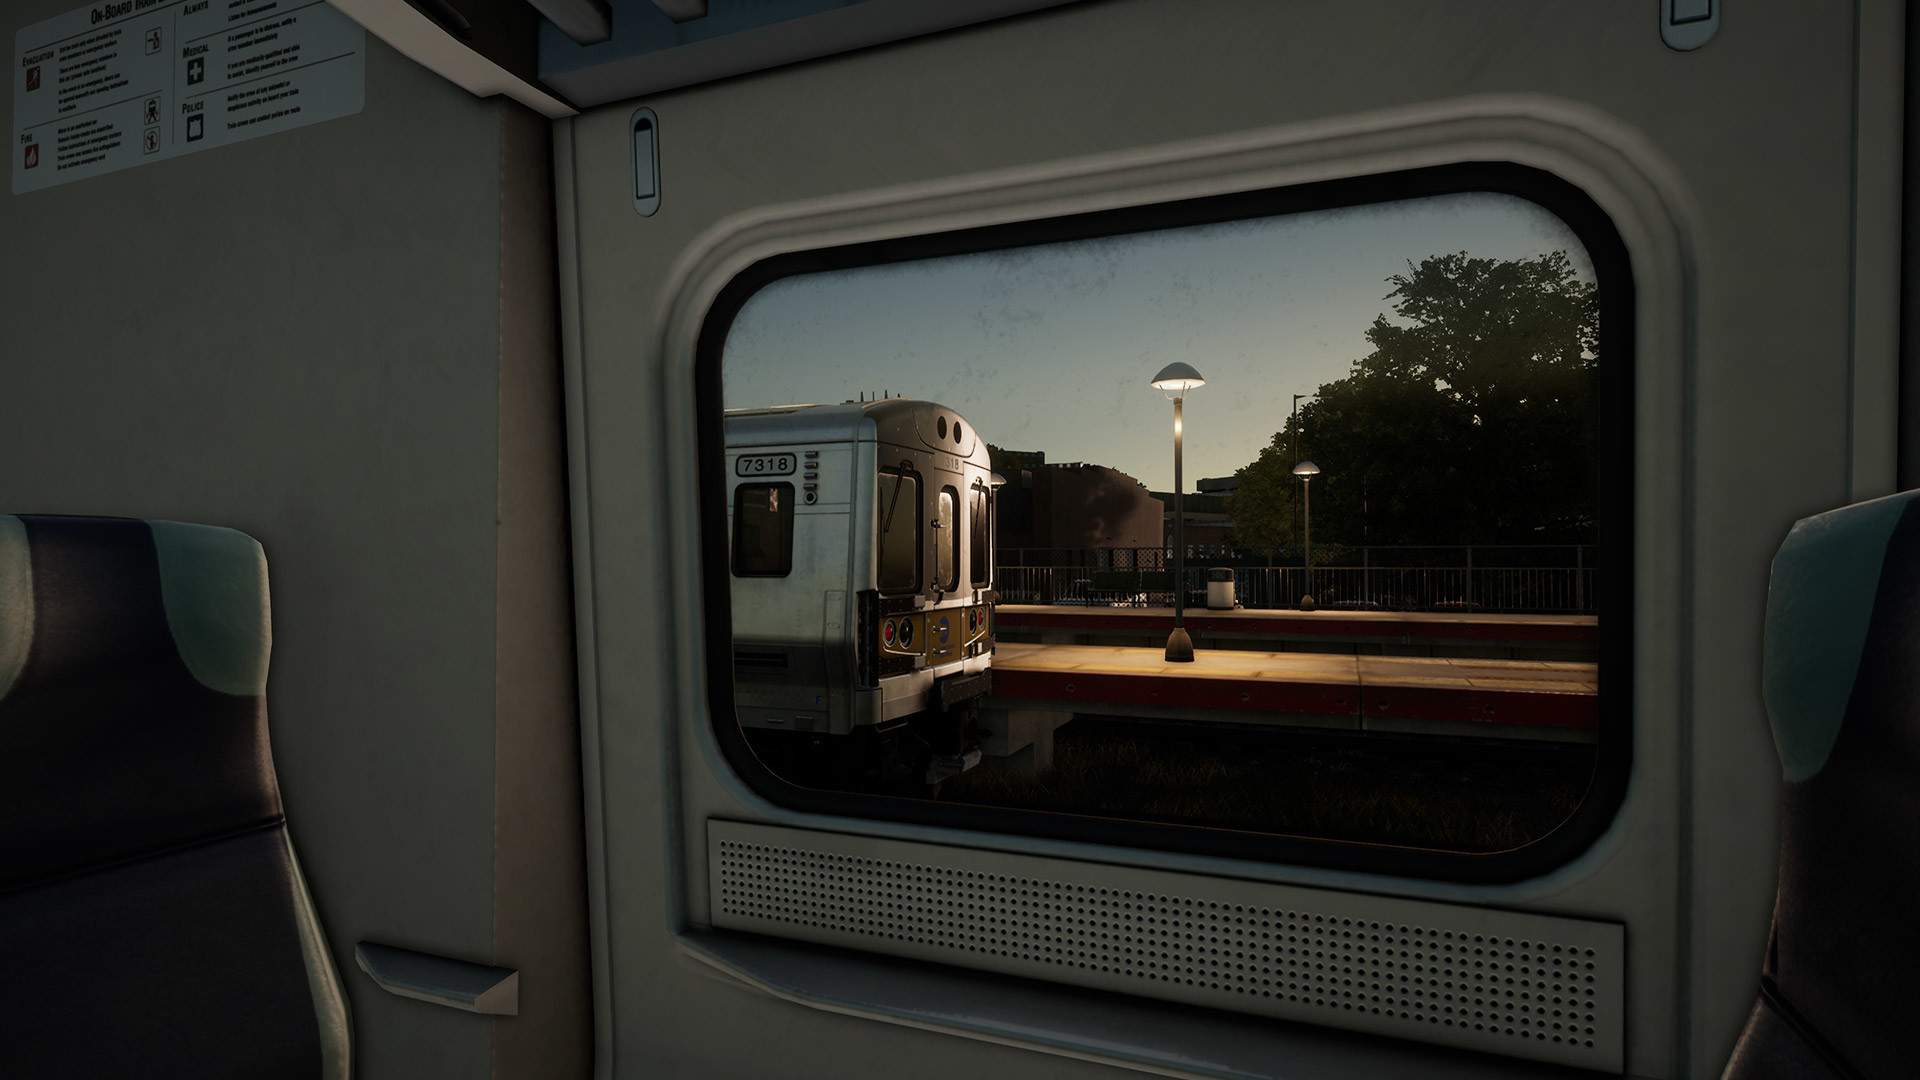 Train Sim World 2: Long Island Rail Road: New York - Hicksville Route Add-On DLC Steam CD Key [USD 5.63]